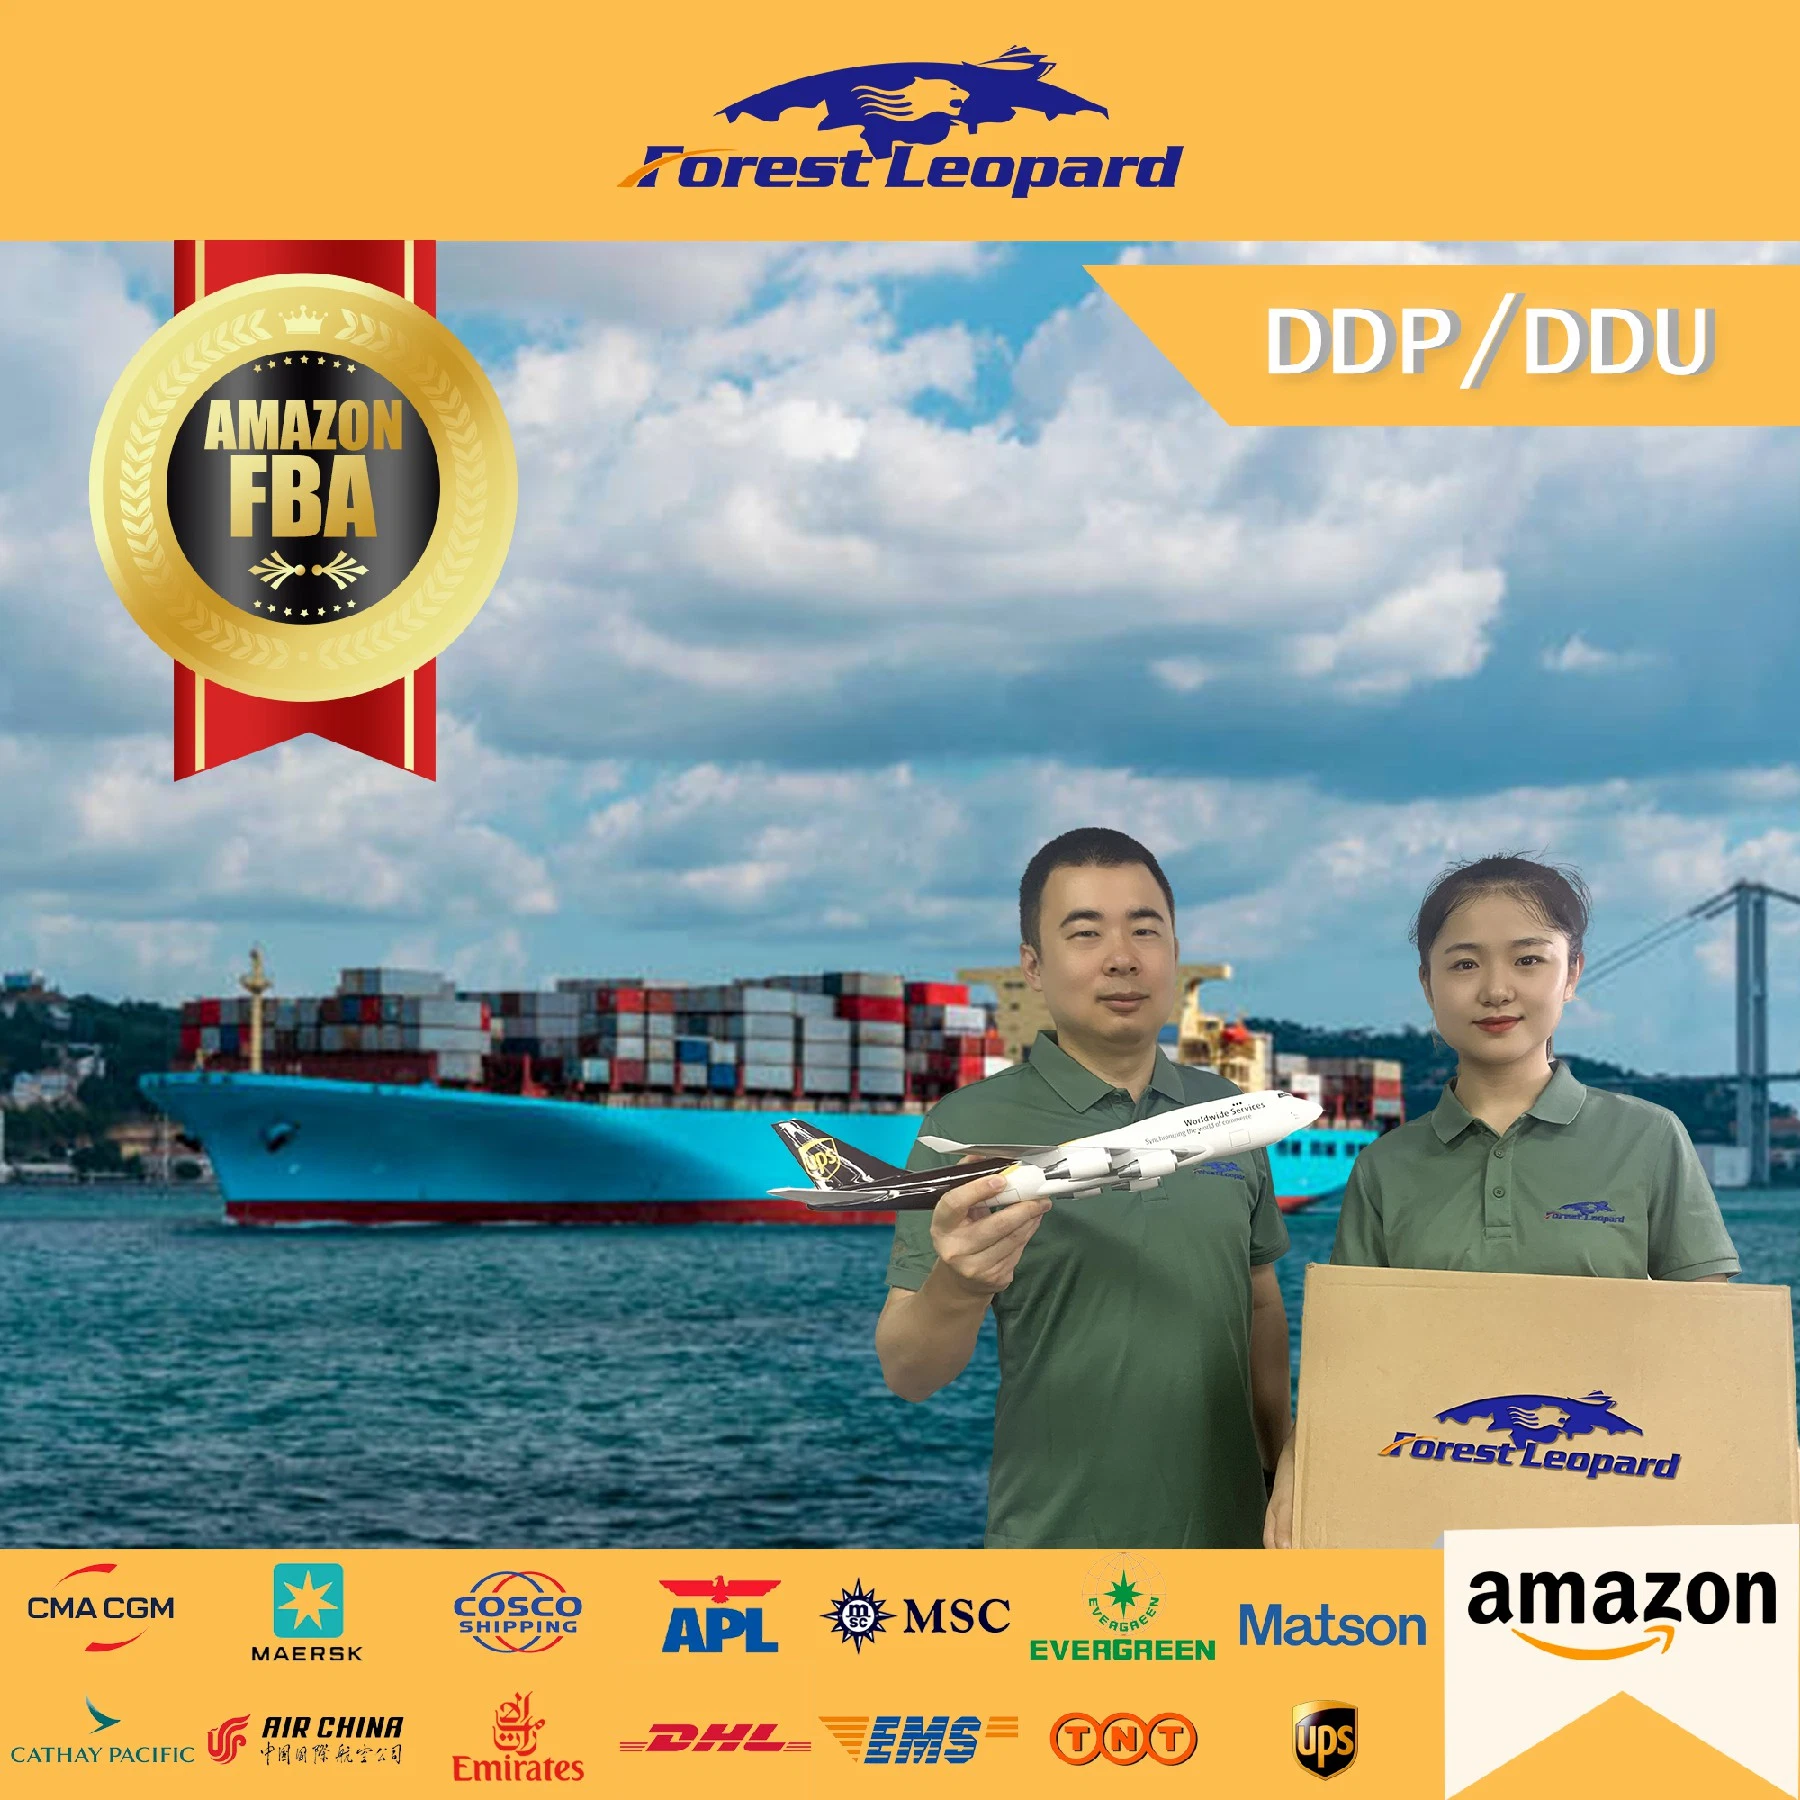 a-Class Sea Shipping From China Freight Forwarder Amazon Fba Forest Leopard Logistics Shenzhen Shanghai Zhejiang Global DDP/DDU